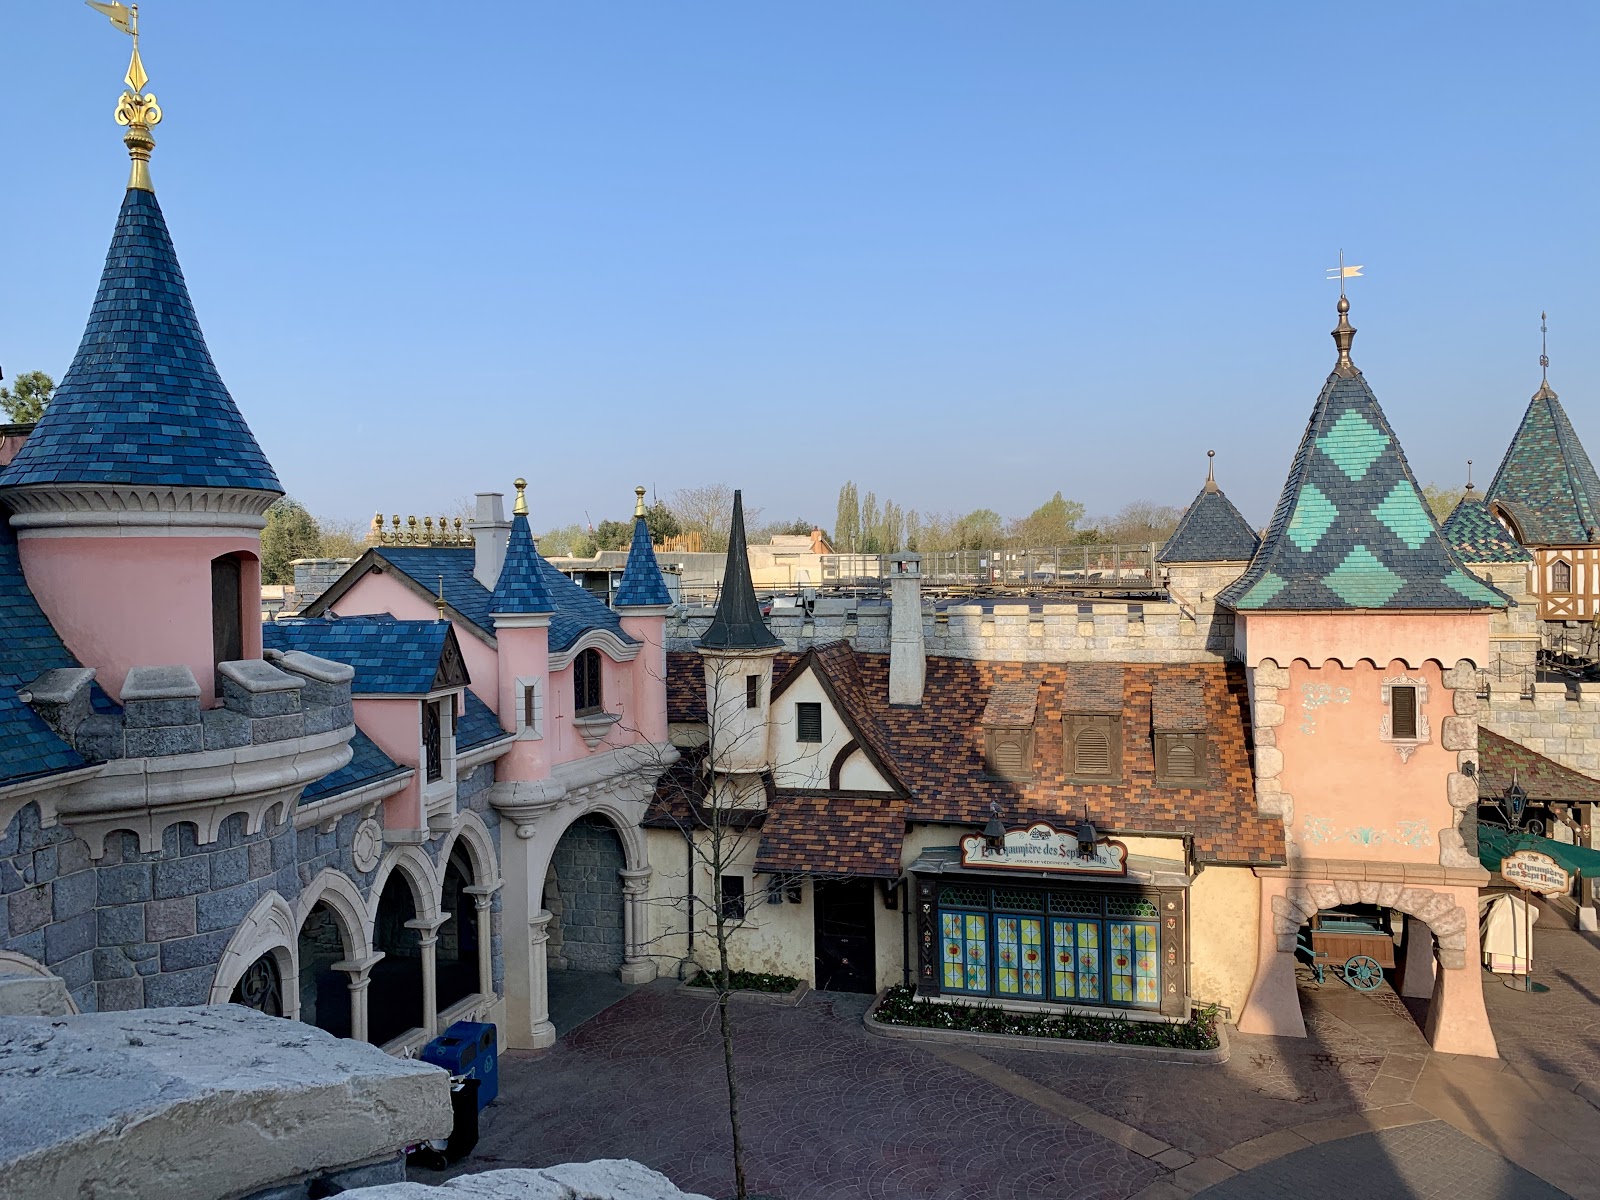 Sleeping Beauty Castle Walkthrough - Disneyland Paris 